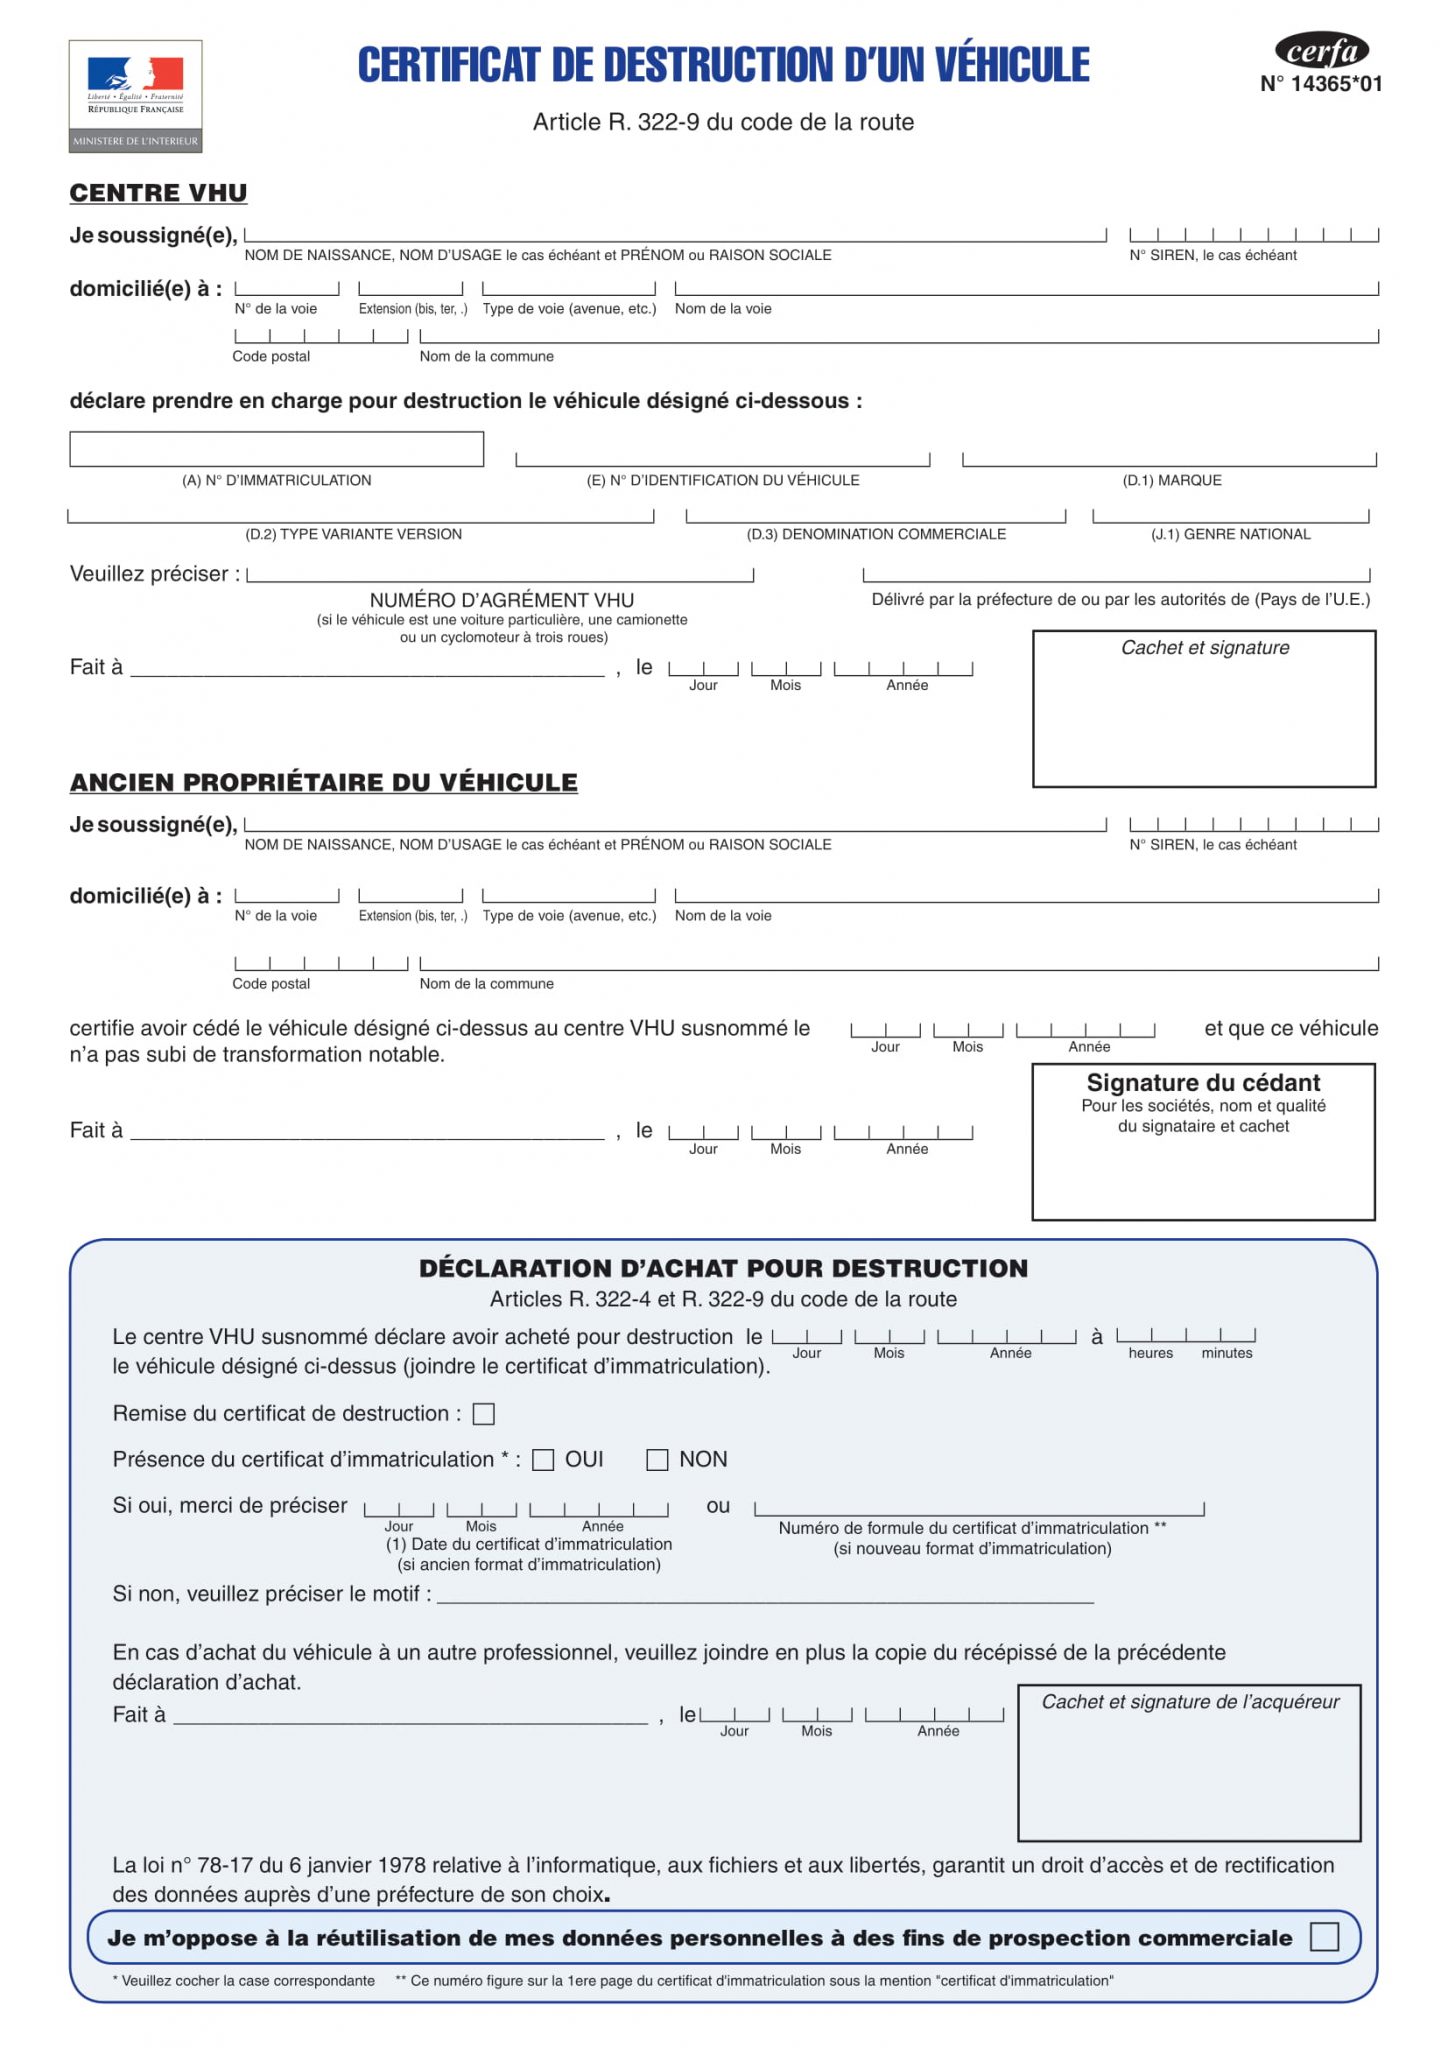 Le certificat de destruction d’un véhicule Cerfa 14365*01